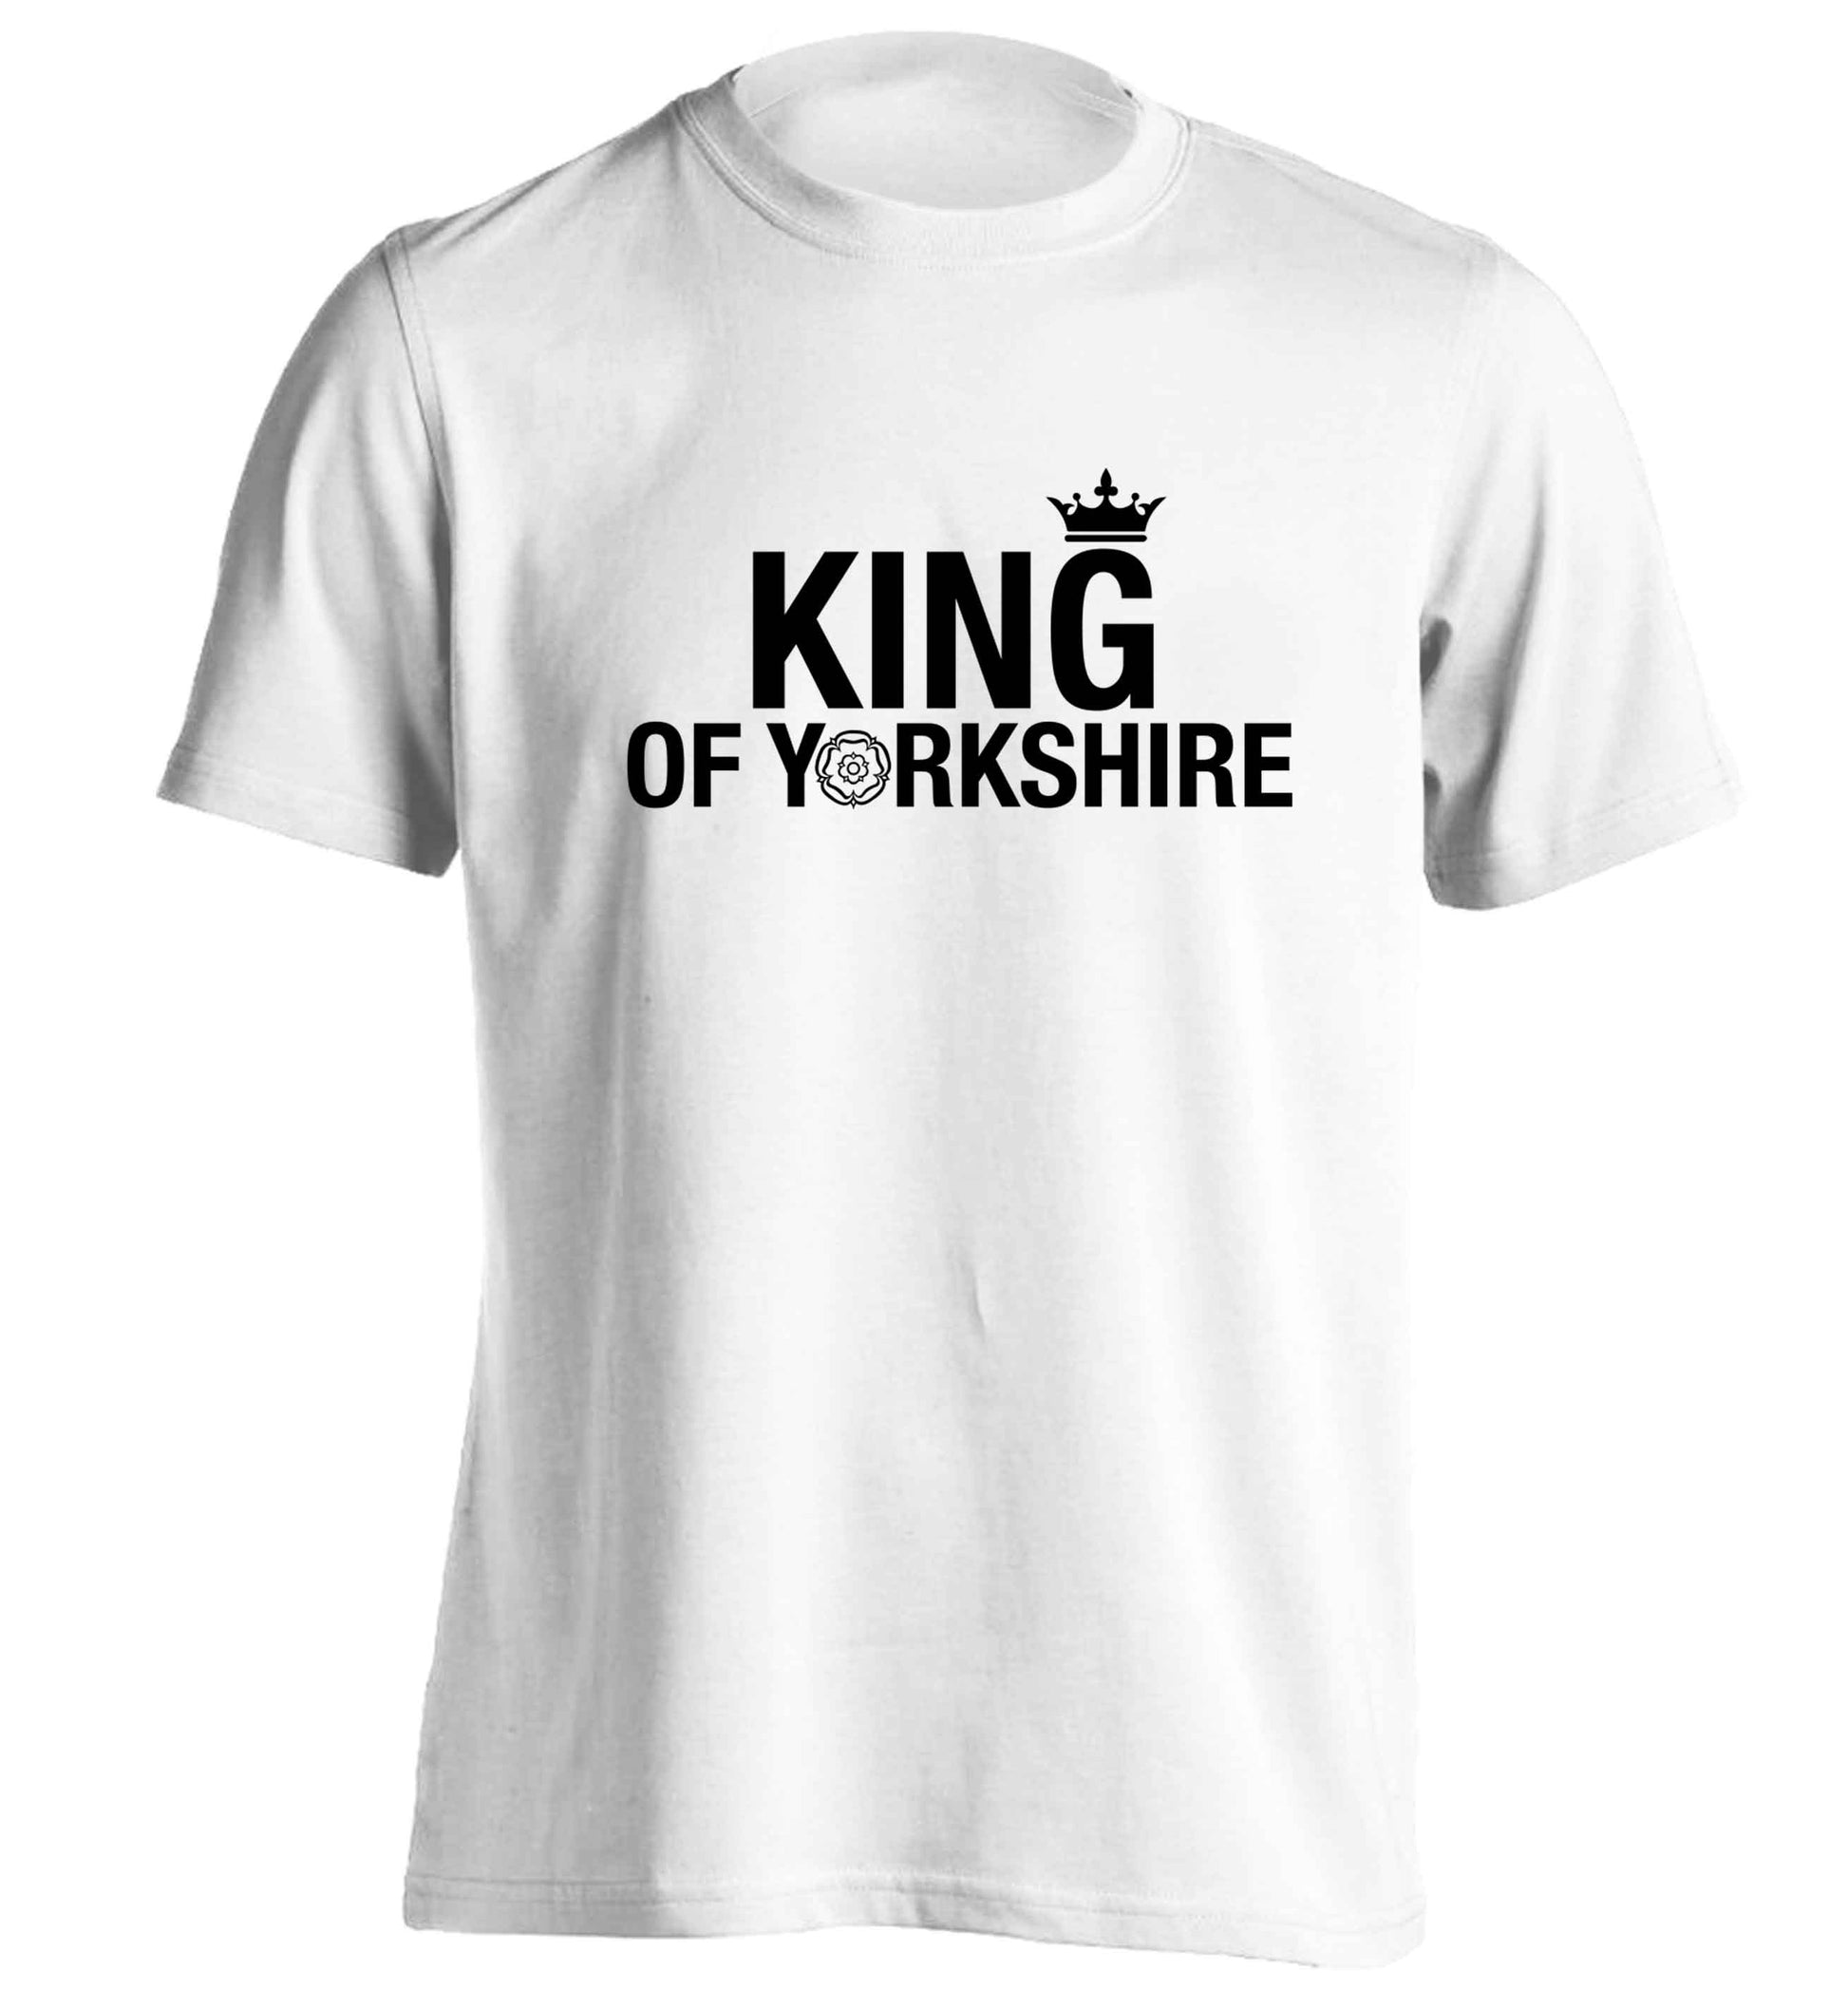 King of Yorkshire adults unisex white Tshirt 2XL